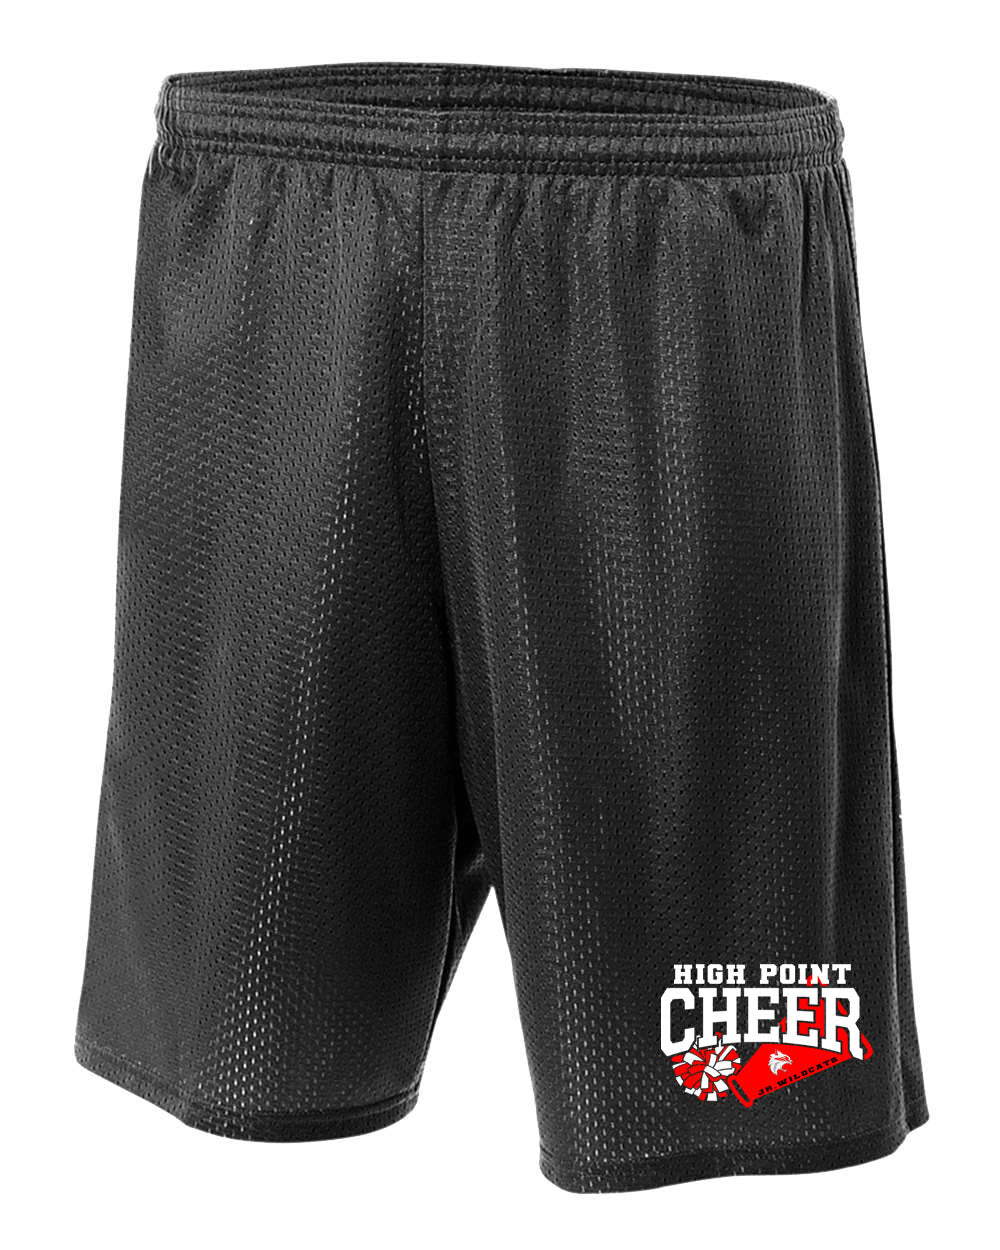 High Point Cheer Design 1 Shorts